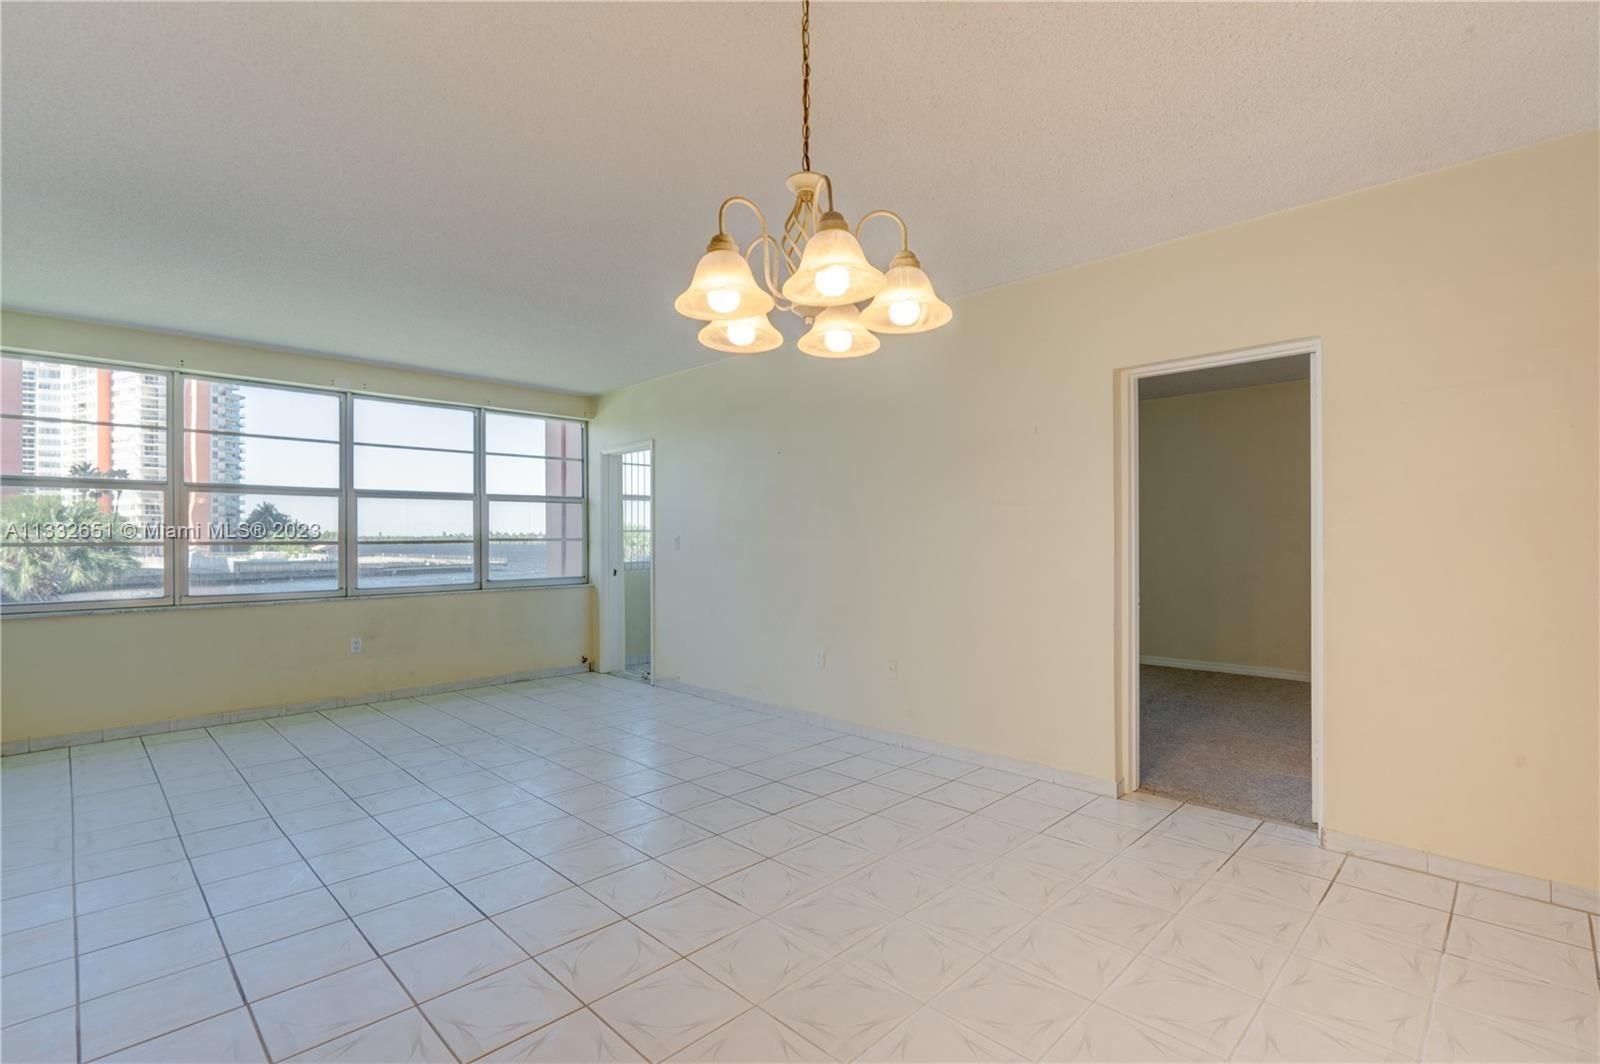 Real estate property located at 18555 14th Ave #606, Miami-Dade County, Miami, FL